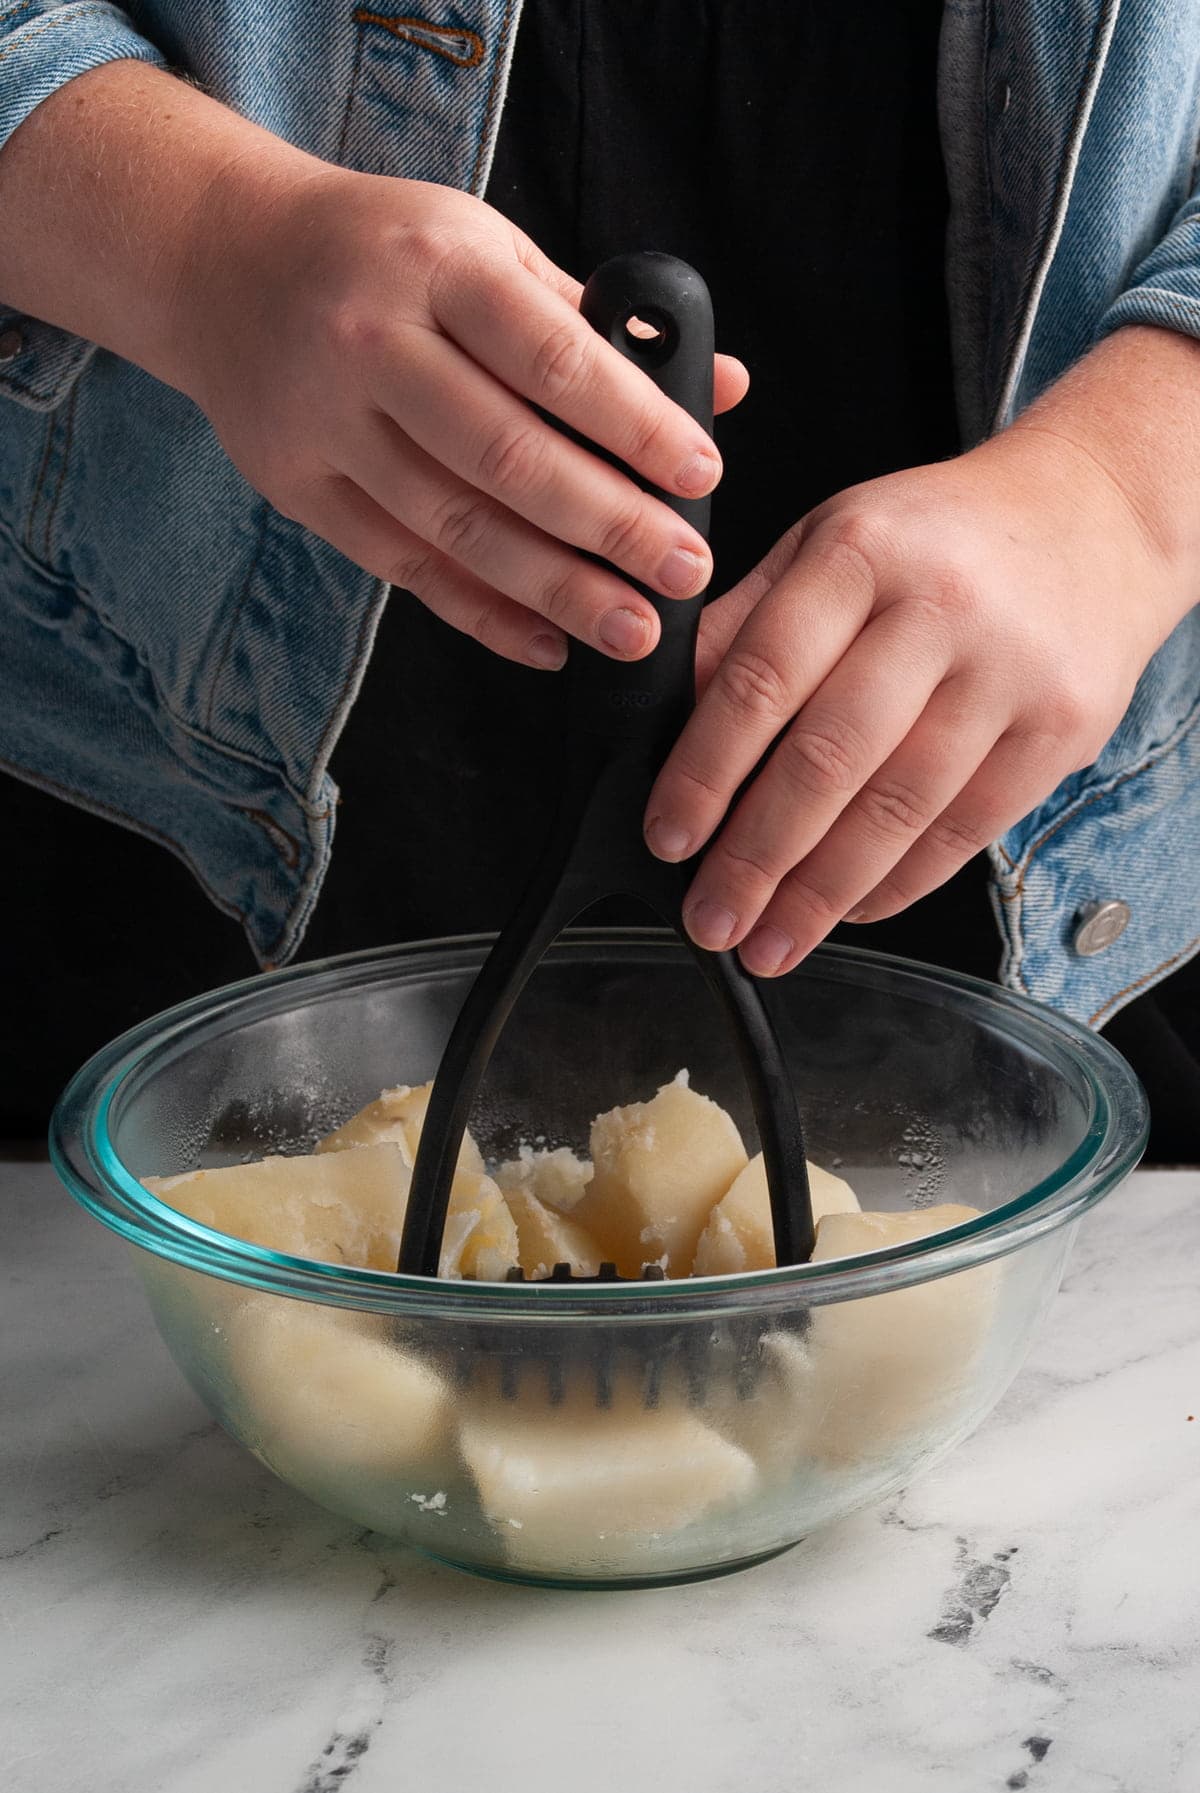 mashing potatoes in a glass bowl